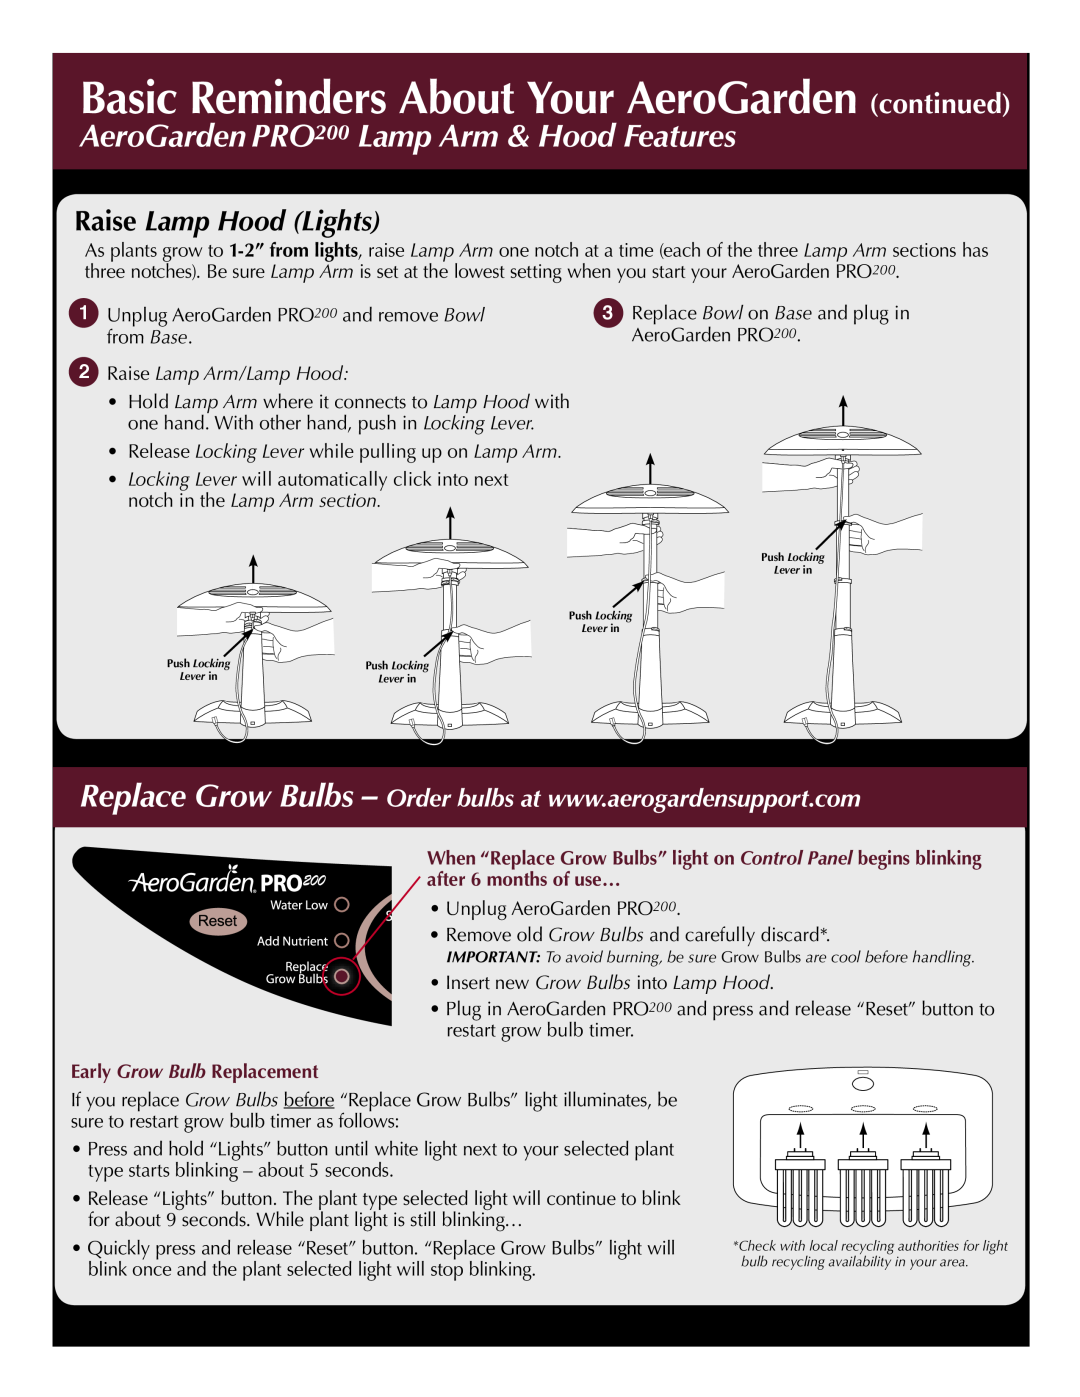 AeroGarden 100733-DSS Basic Reminders About Your AeroGarden continued, AeroGarden PRO200 Lamp Arm & Hood Features 